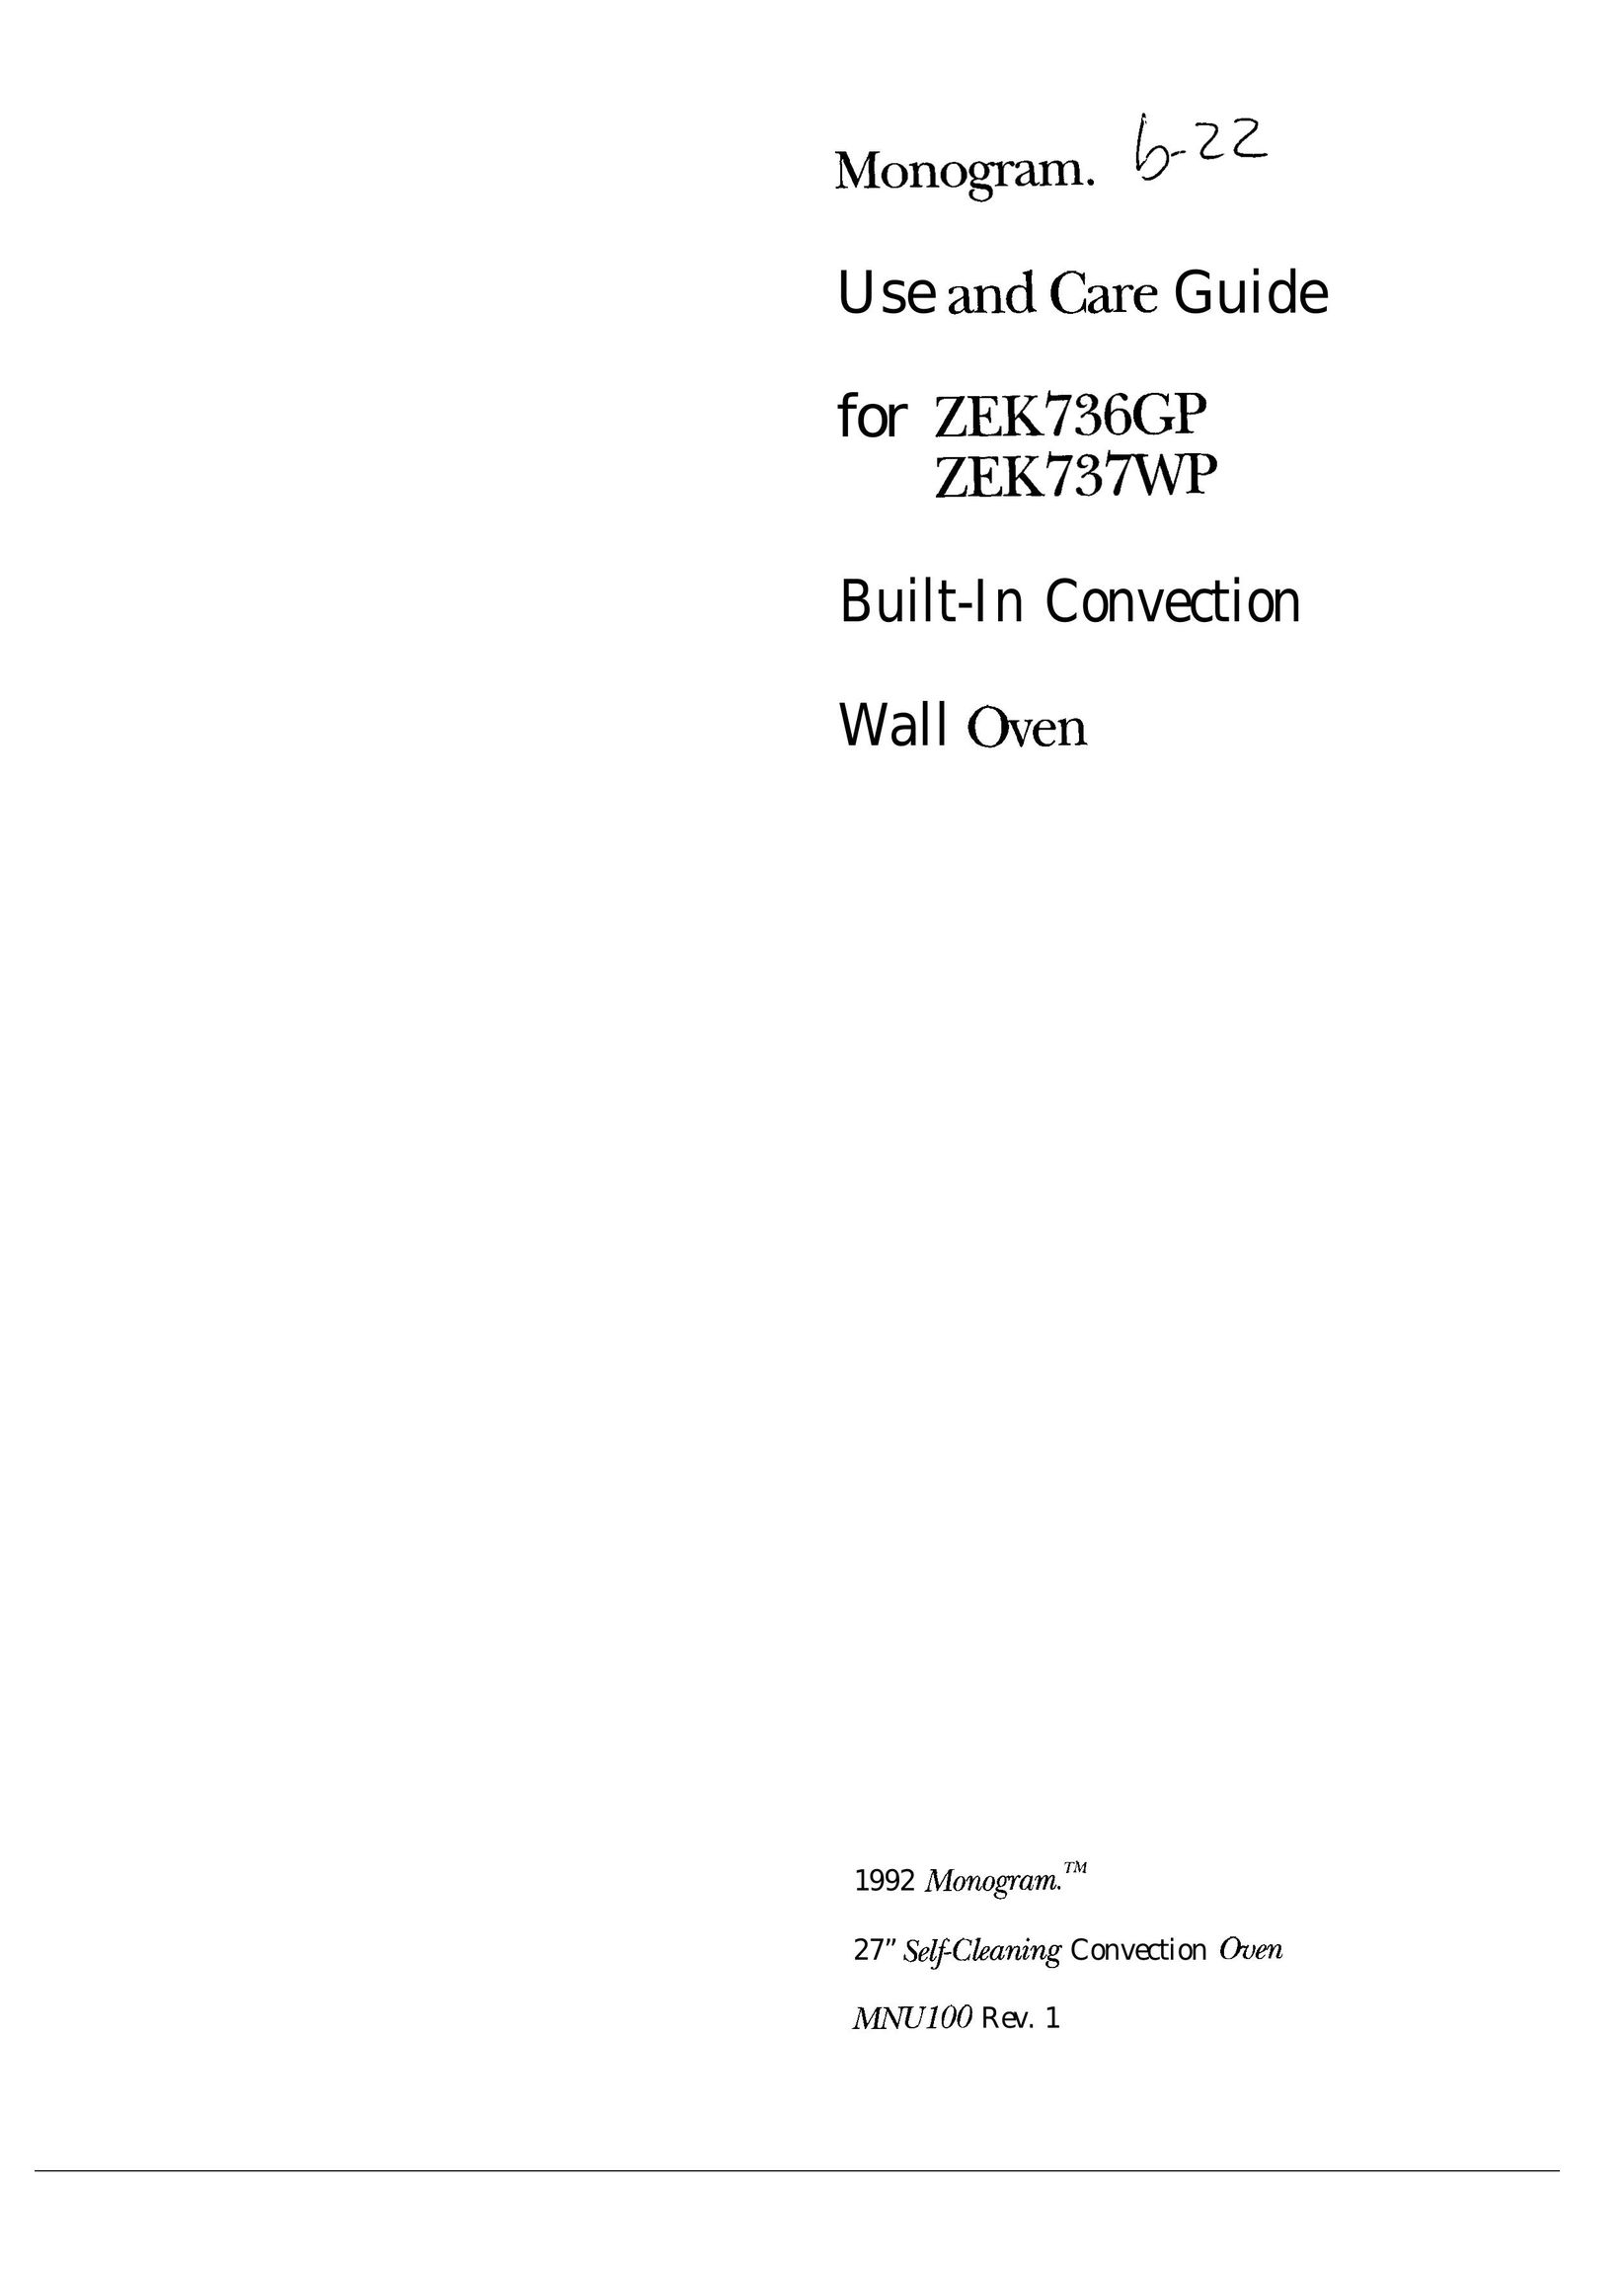 GE Monogram ZEK736GP Convection Oven User Manual